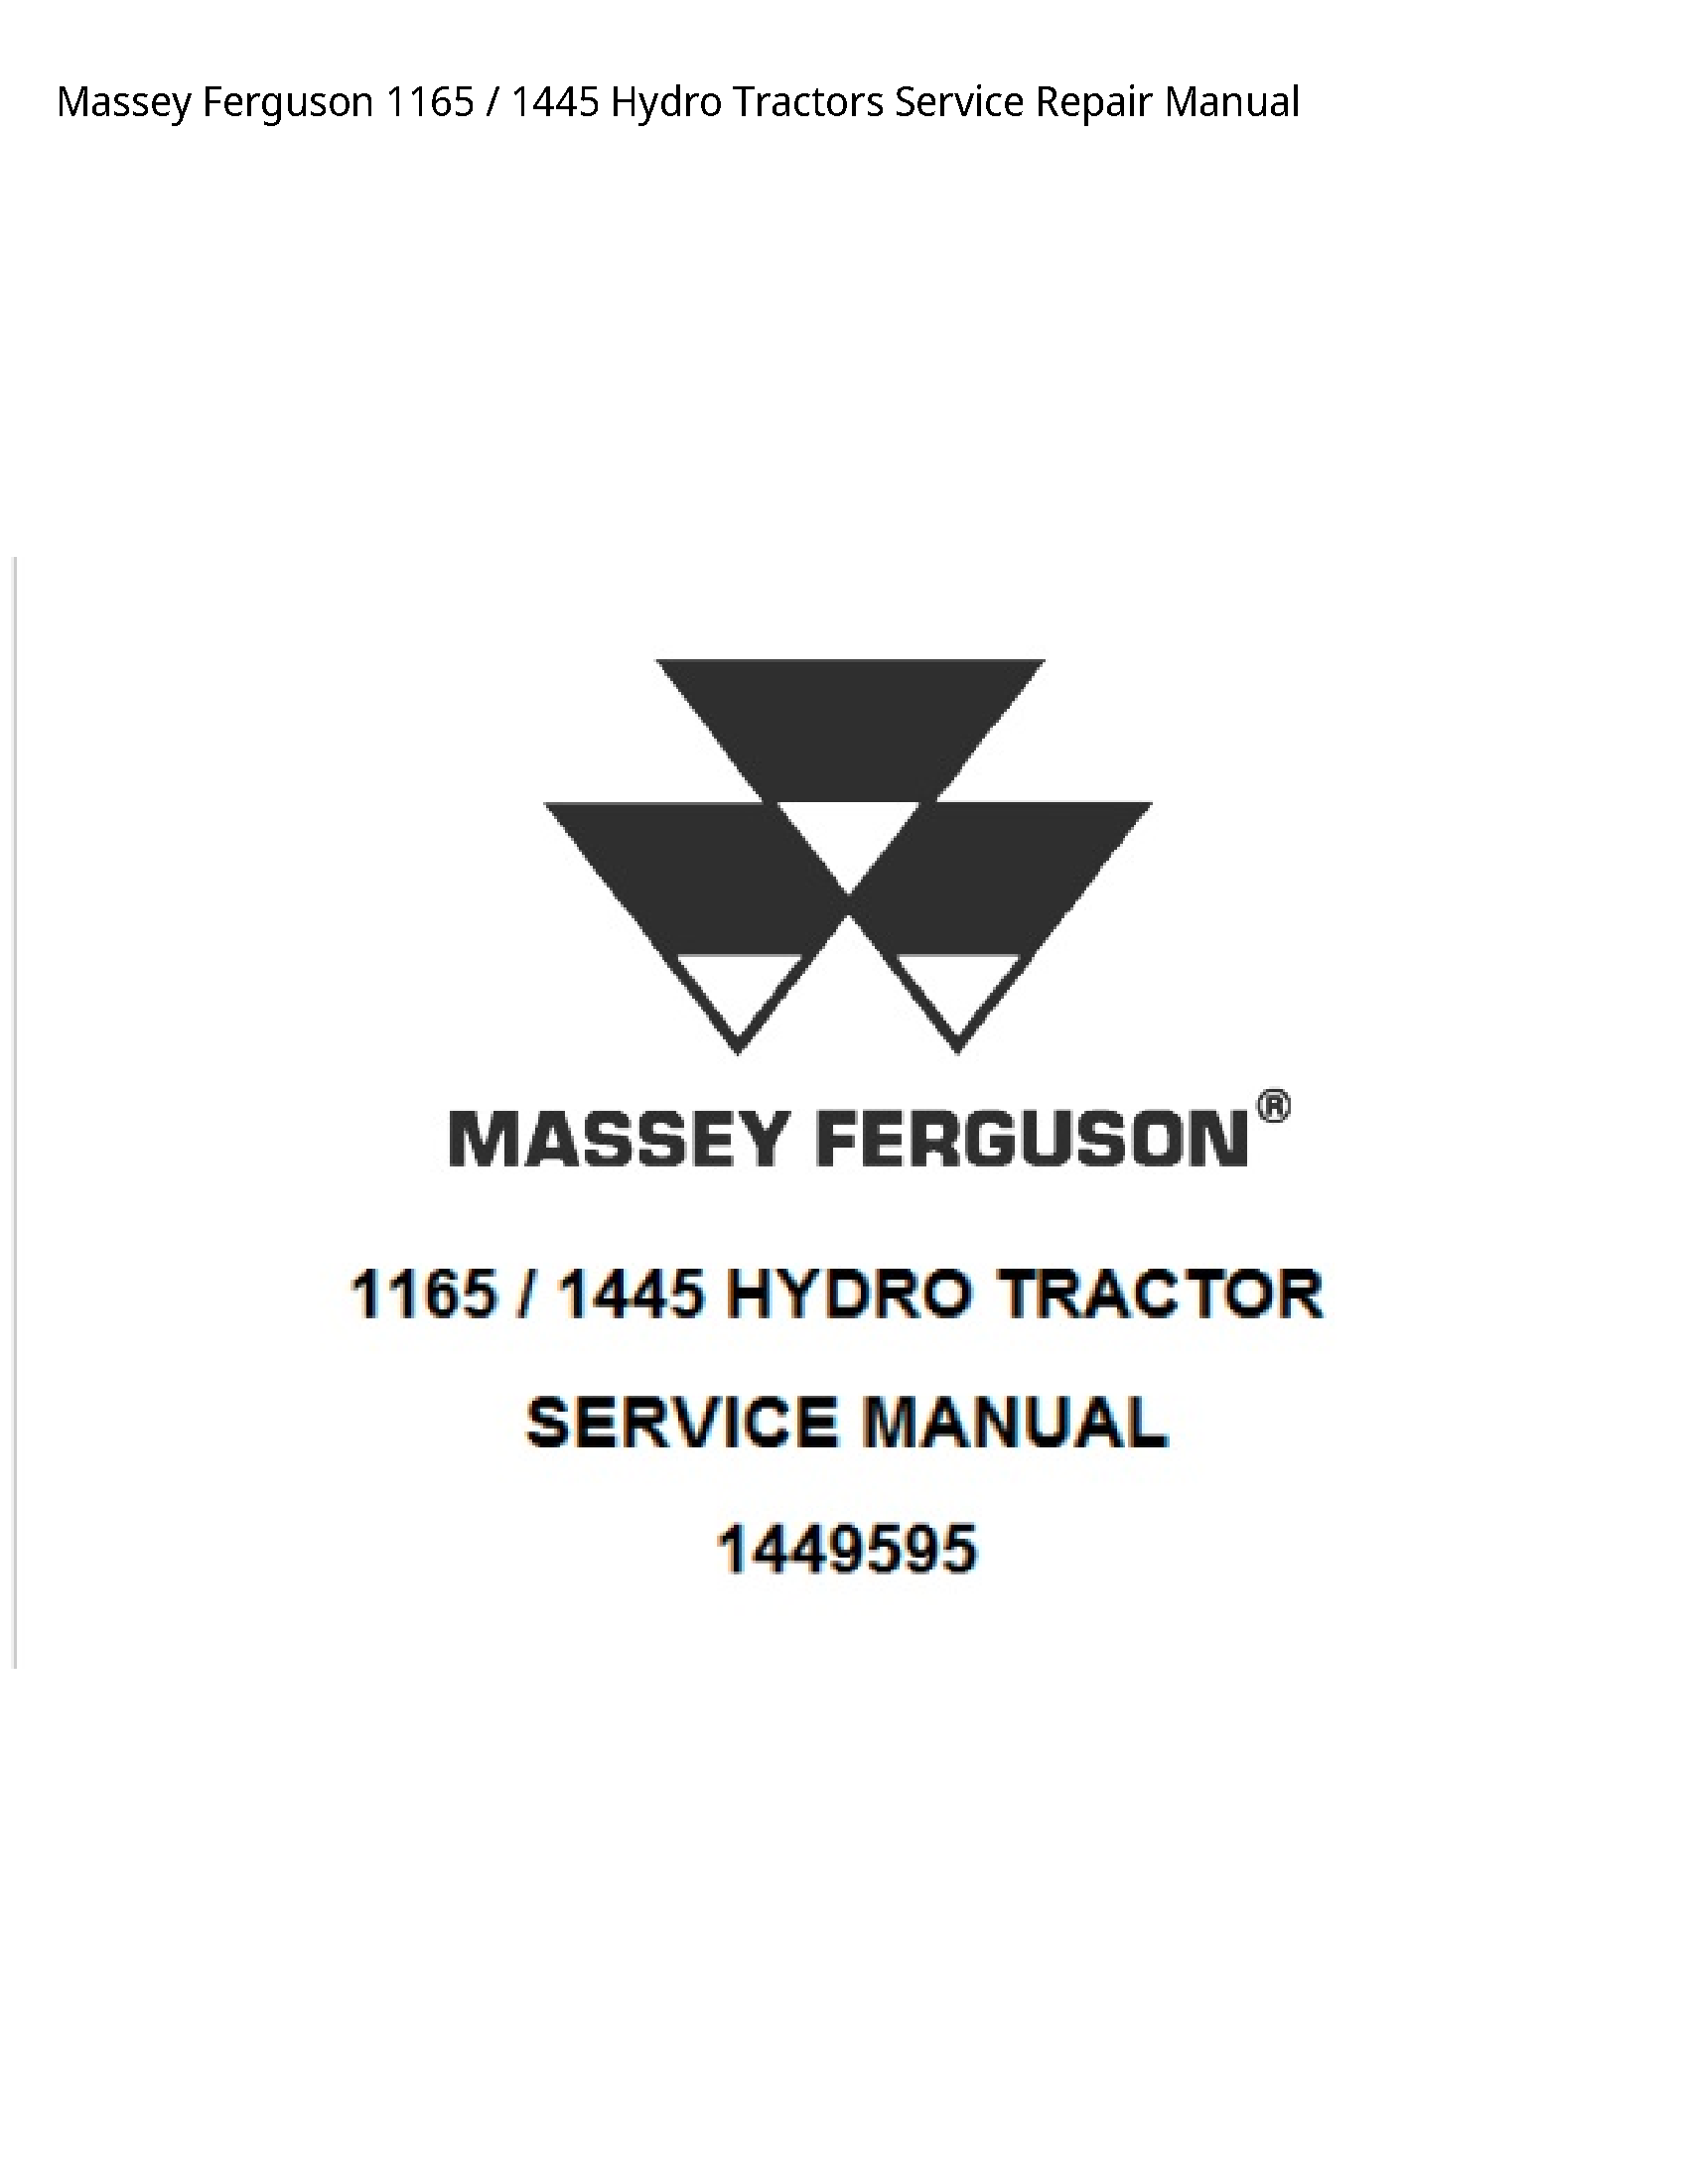 Massey Ferguson 1165 Hydro Tractors manual